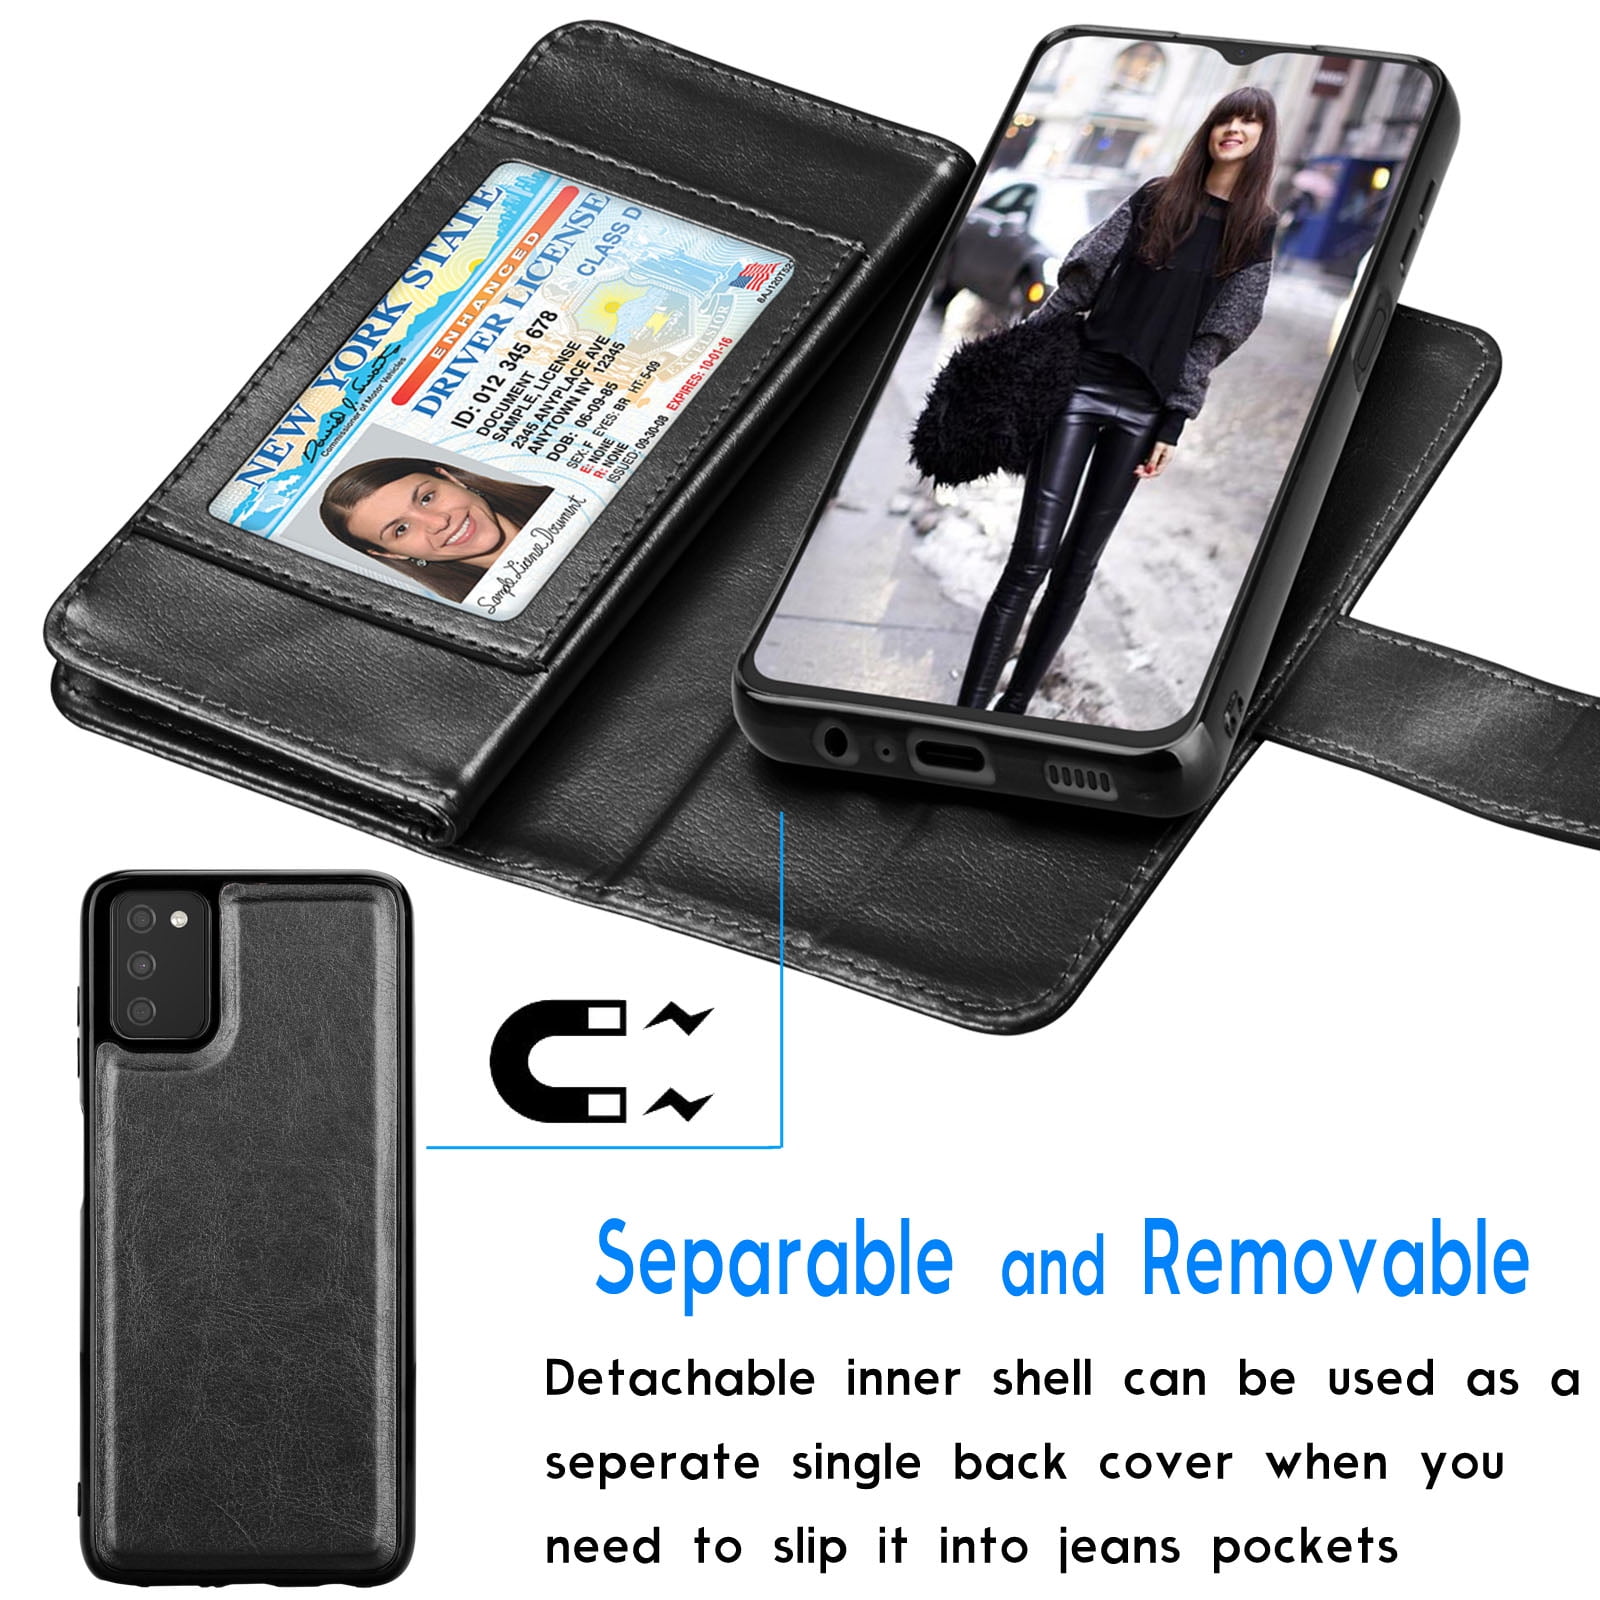 louis vuitton phone wallet for samsung ao3s phone